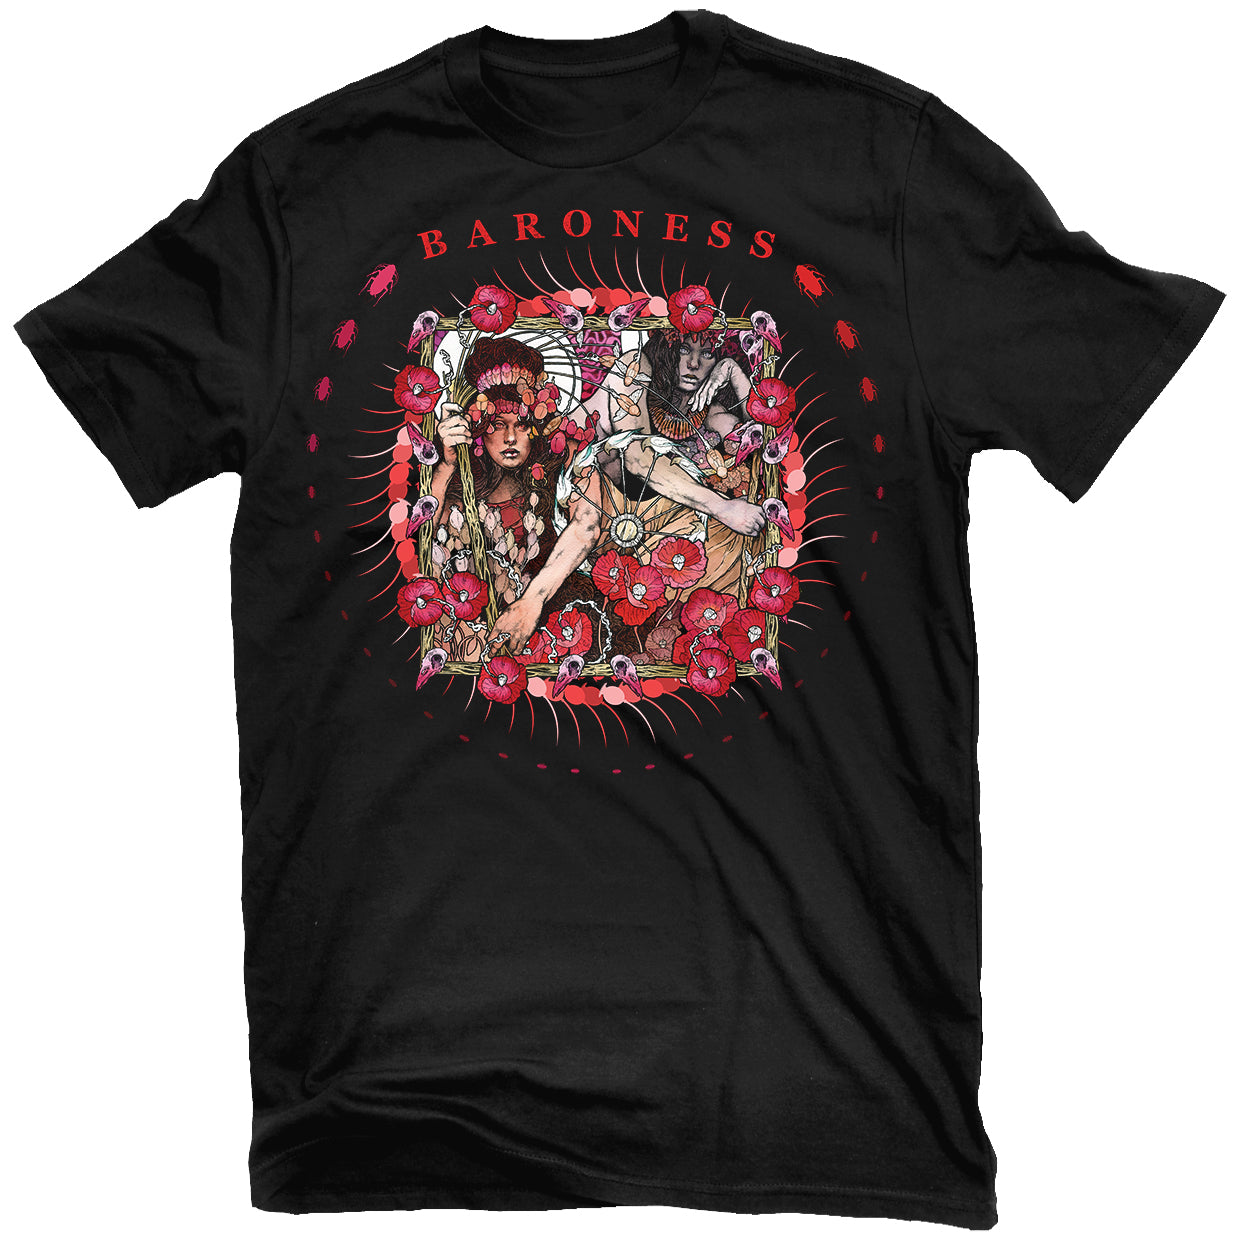 Baroness "Red Album" T-Shirt